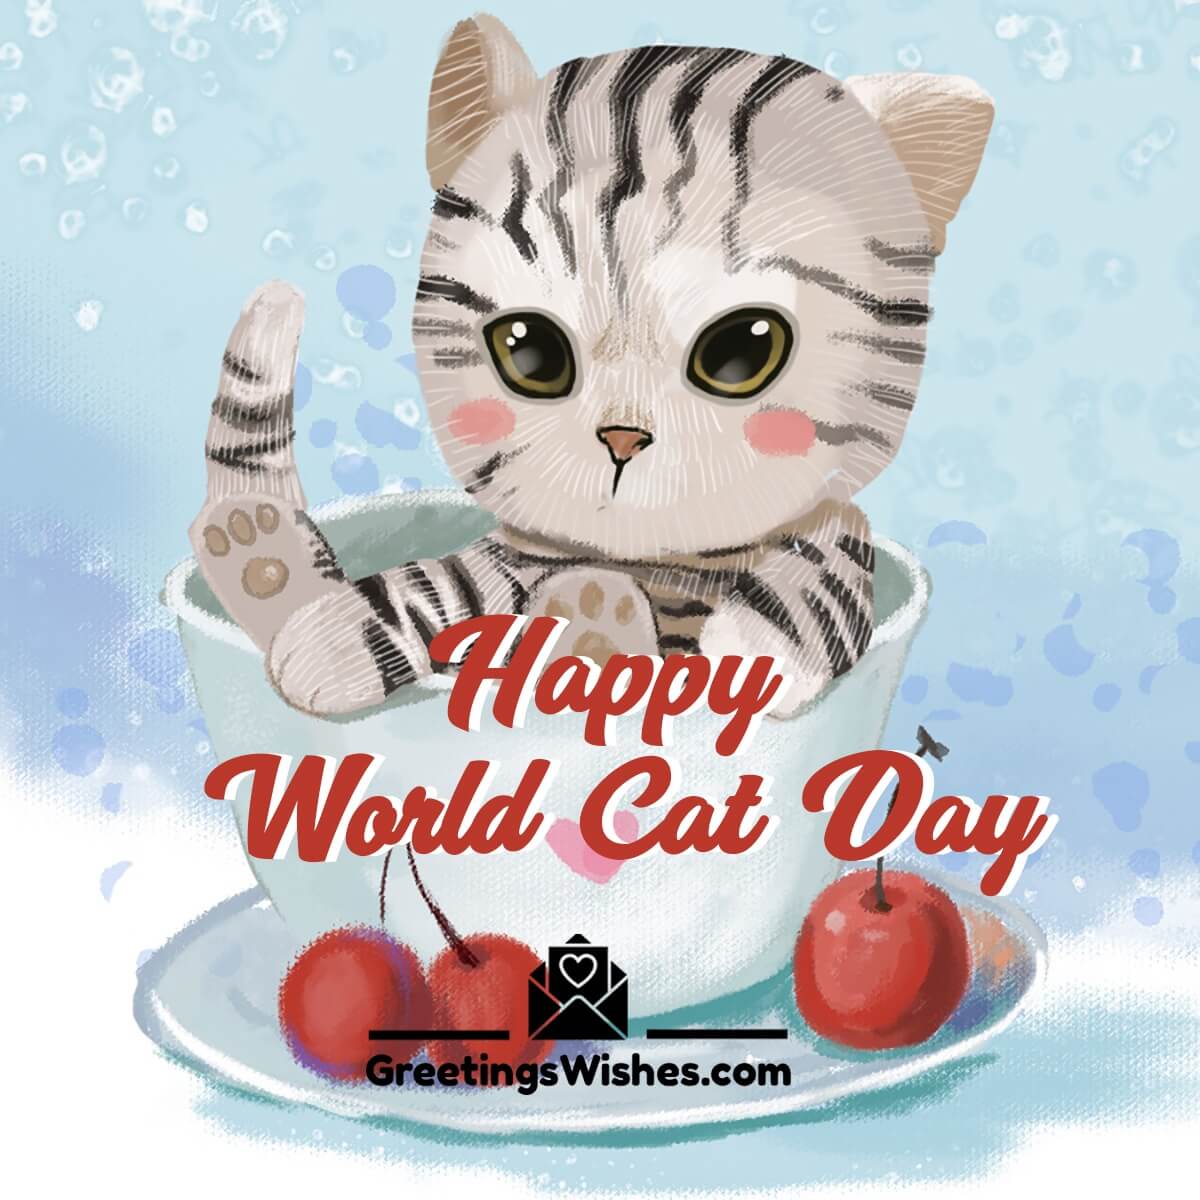 Happy World Cat Day